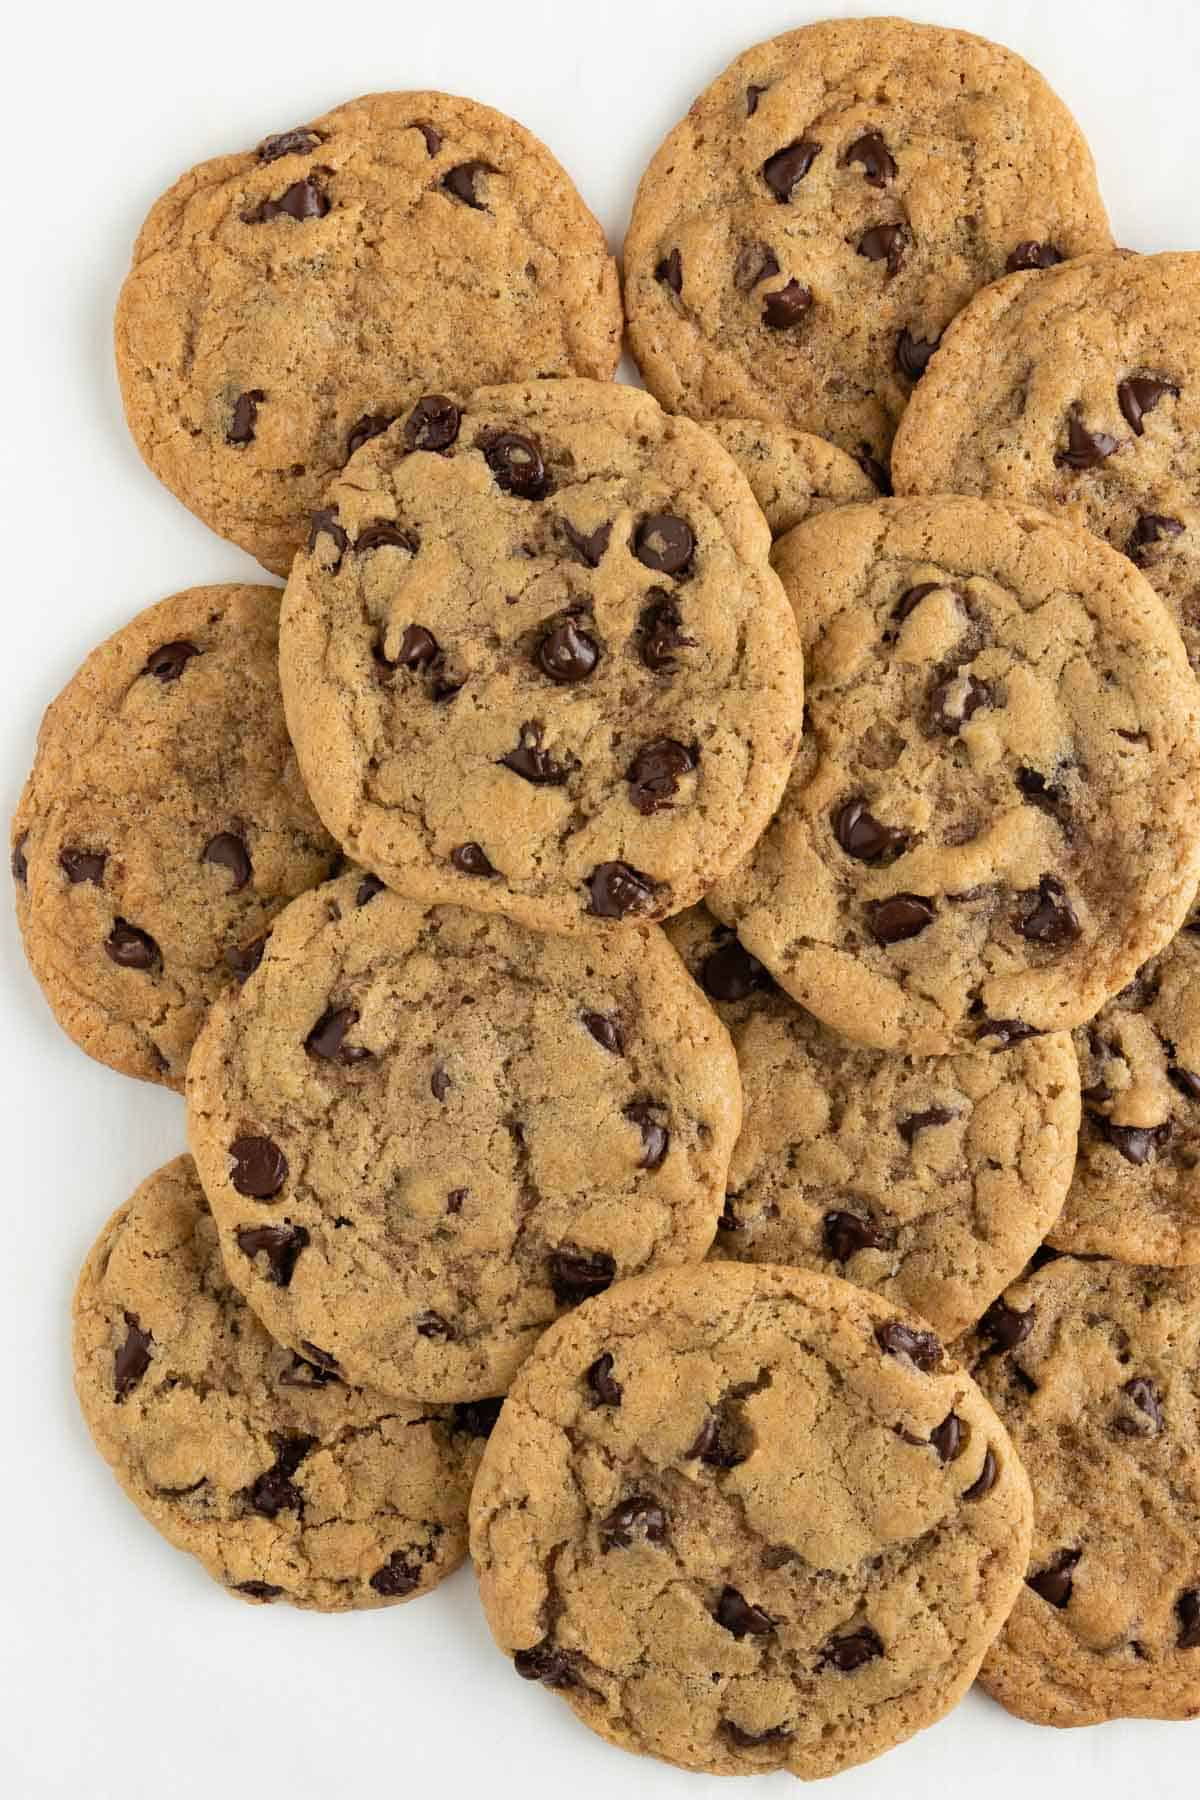 https://www.purelykaylie.com/wp-content/uploads/2020/03/Vegan-Chocolate-Chip-Cookies-27.jpg